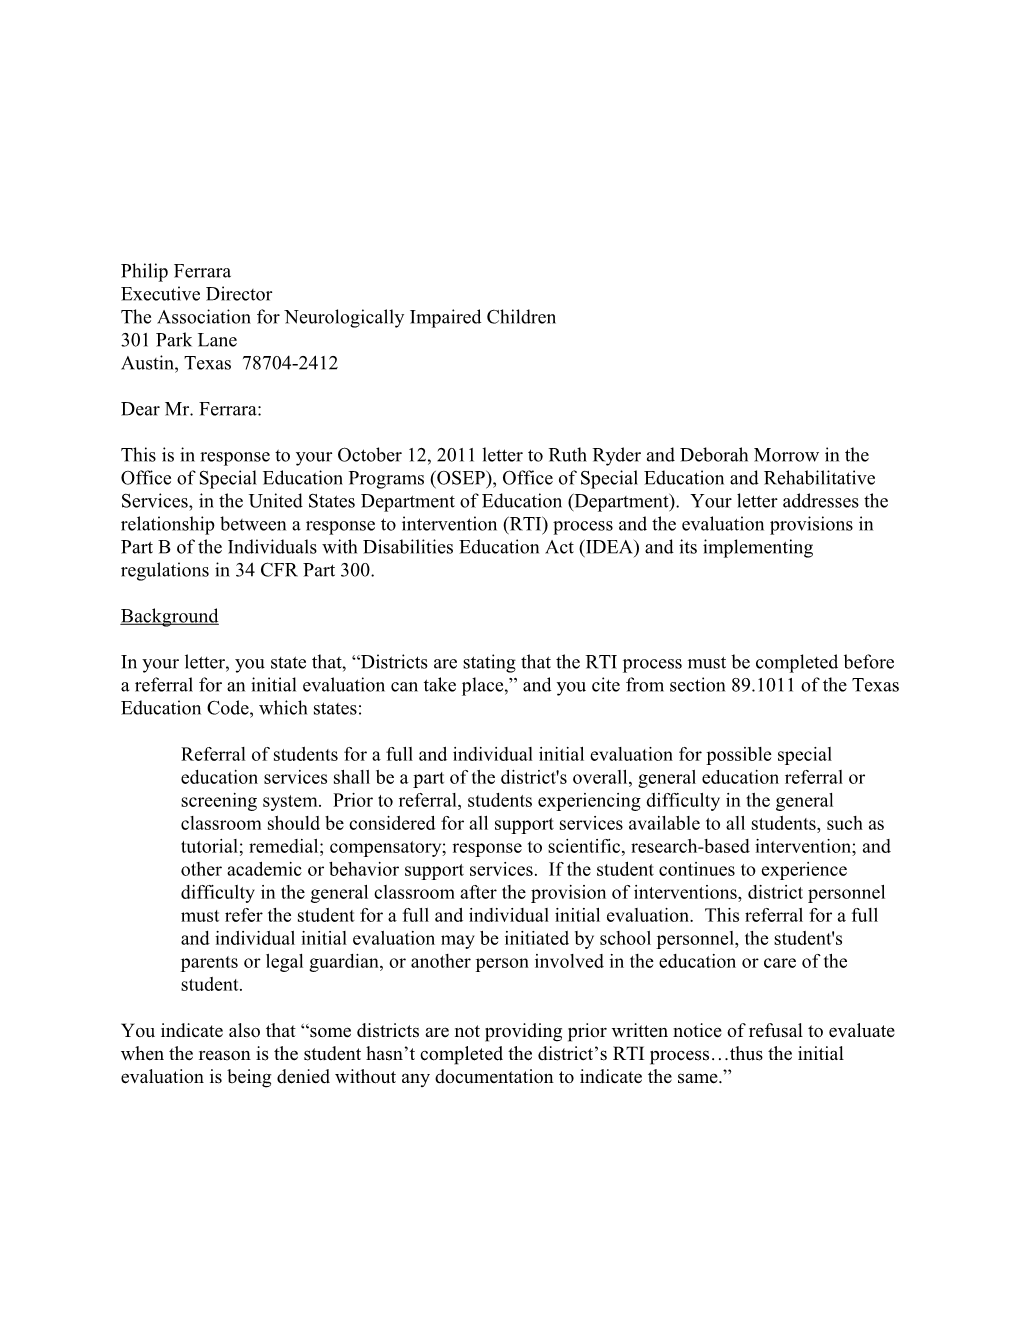 Ferrara Letter Dated 02/29/2012 Re RTI (Ms Word)